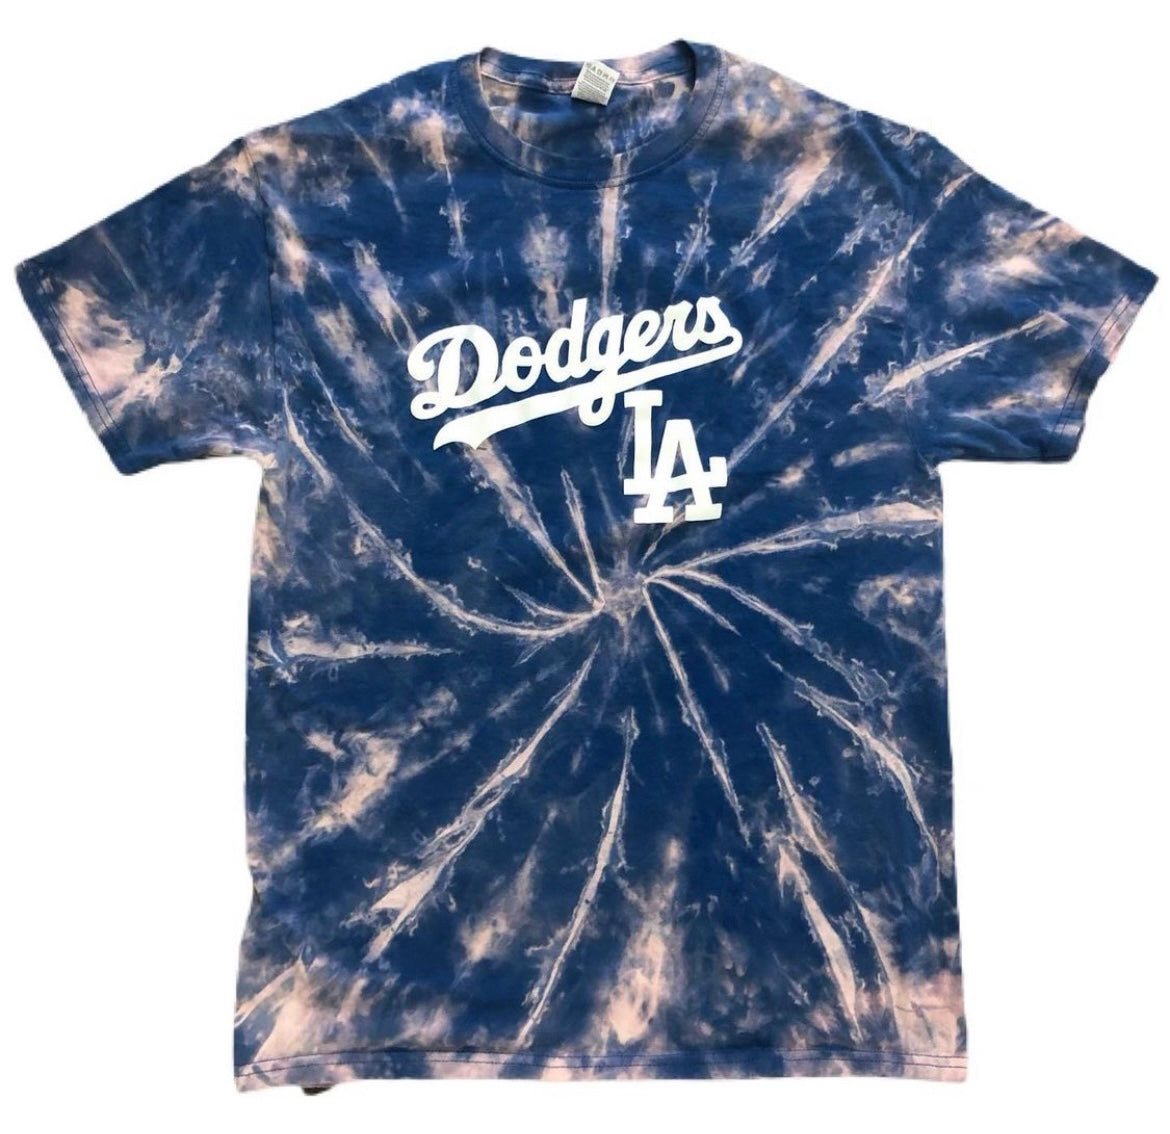 Shop Dodgers T-Shirts - Only at LA Rags & Dyes